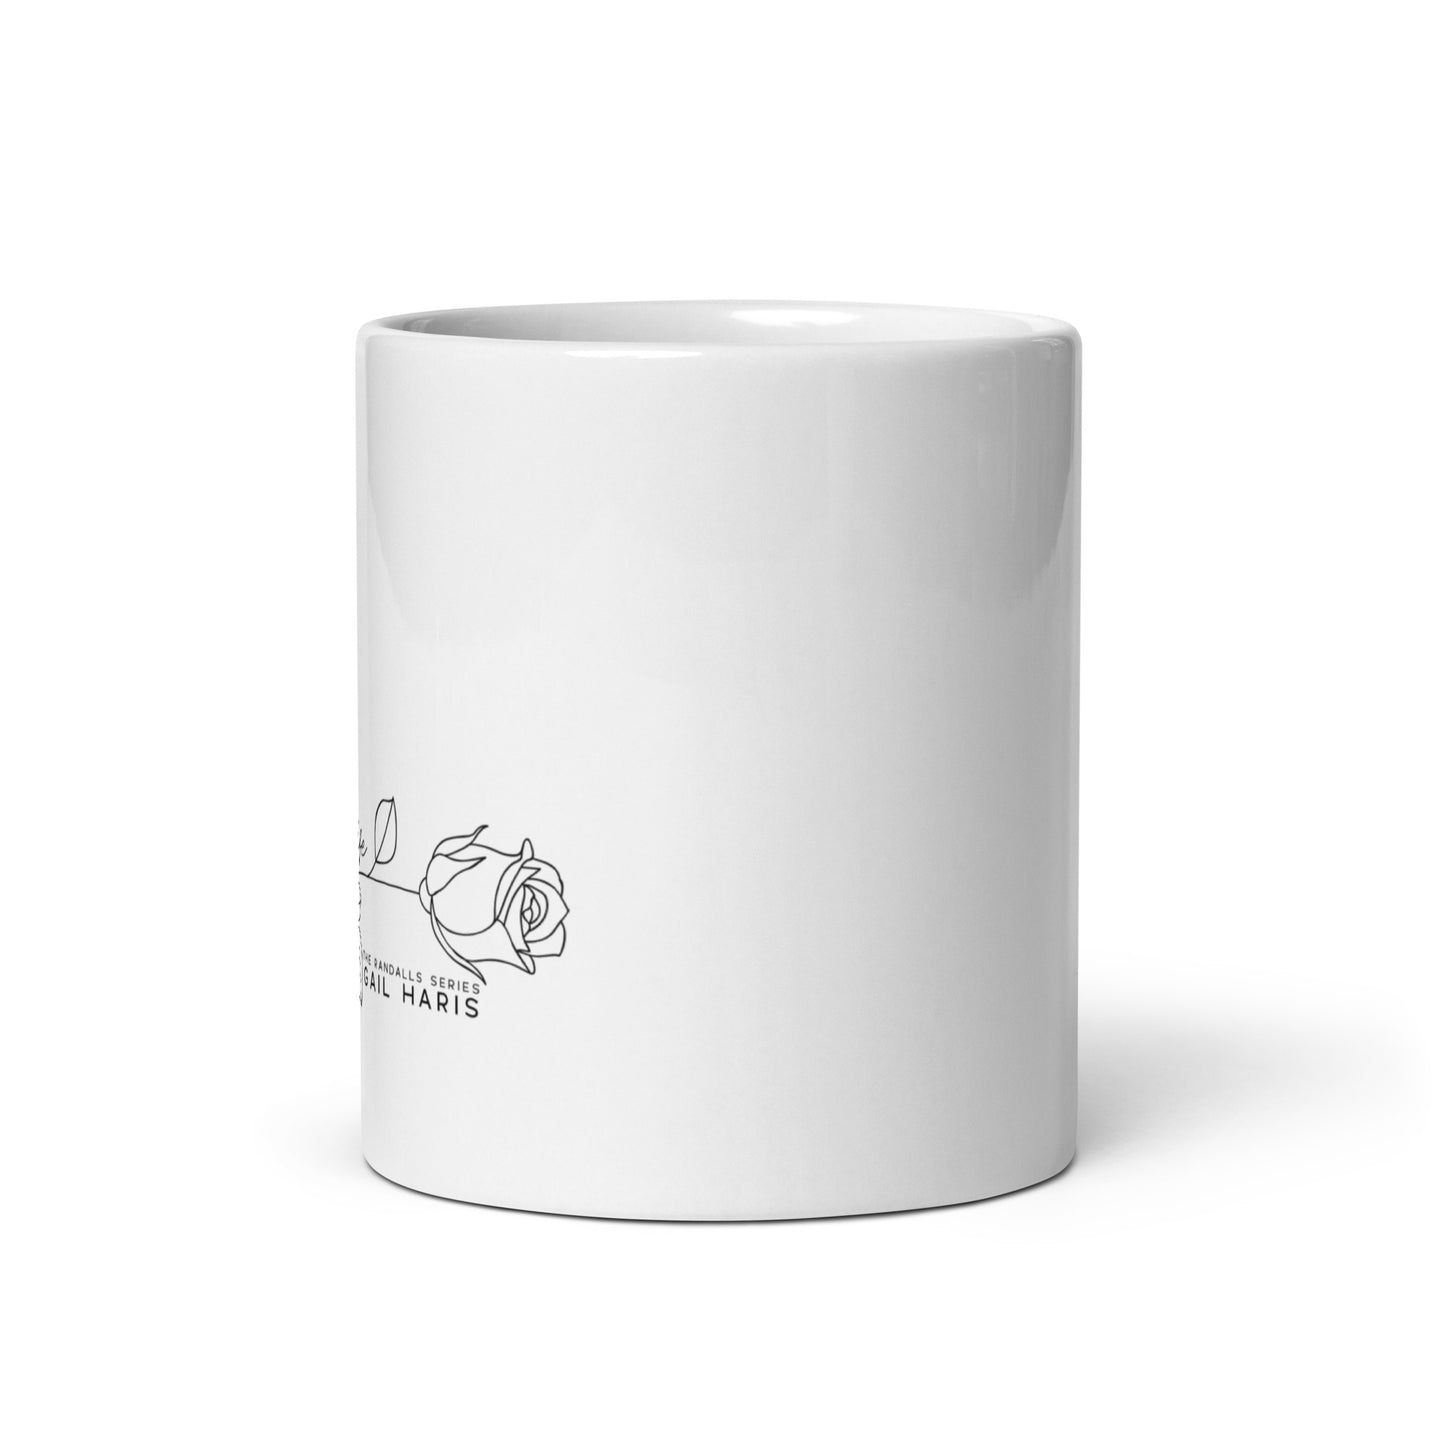 The Randall Series Rose White glossy mug